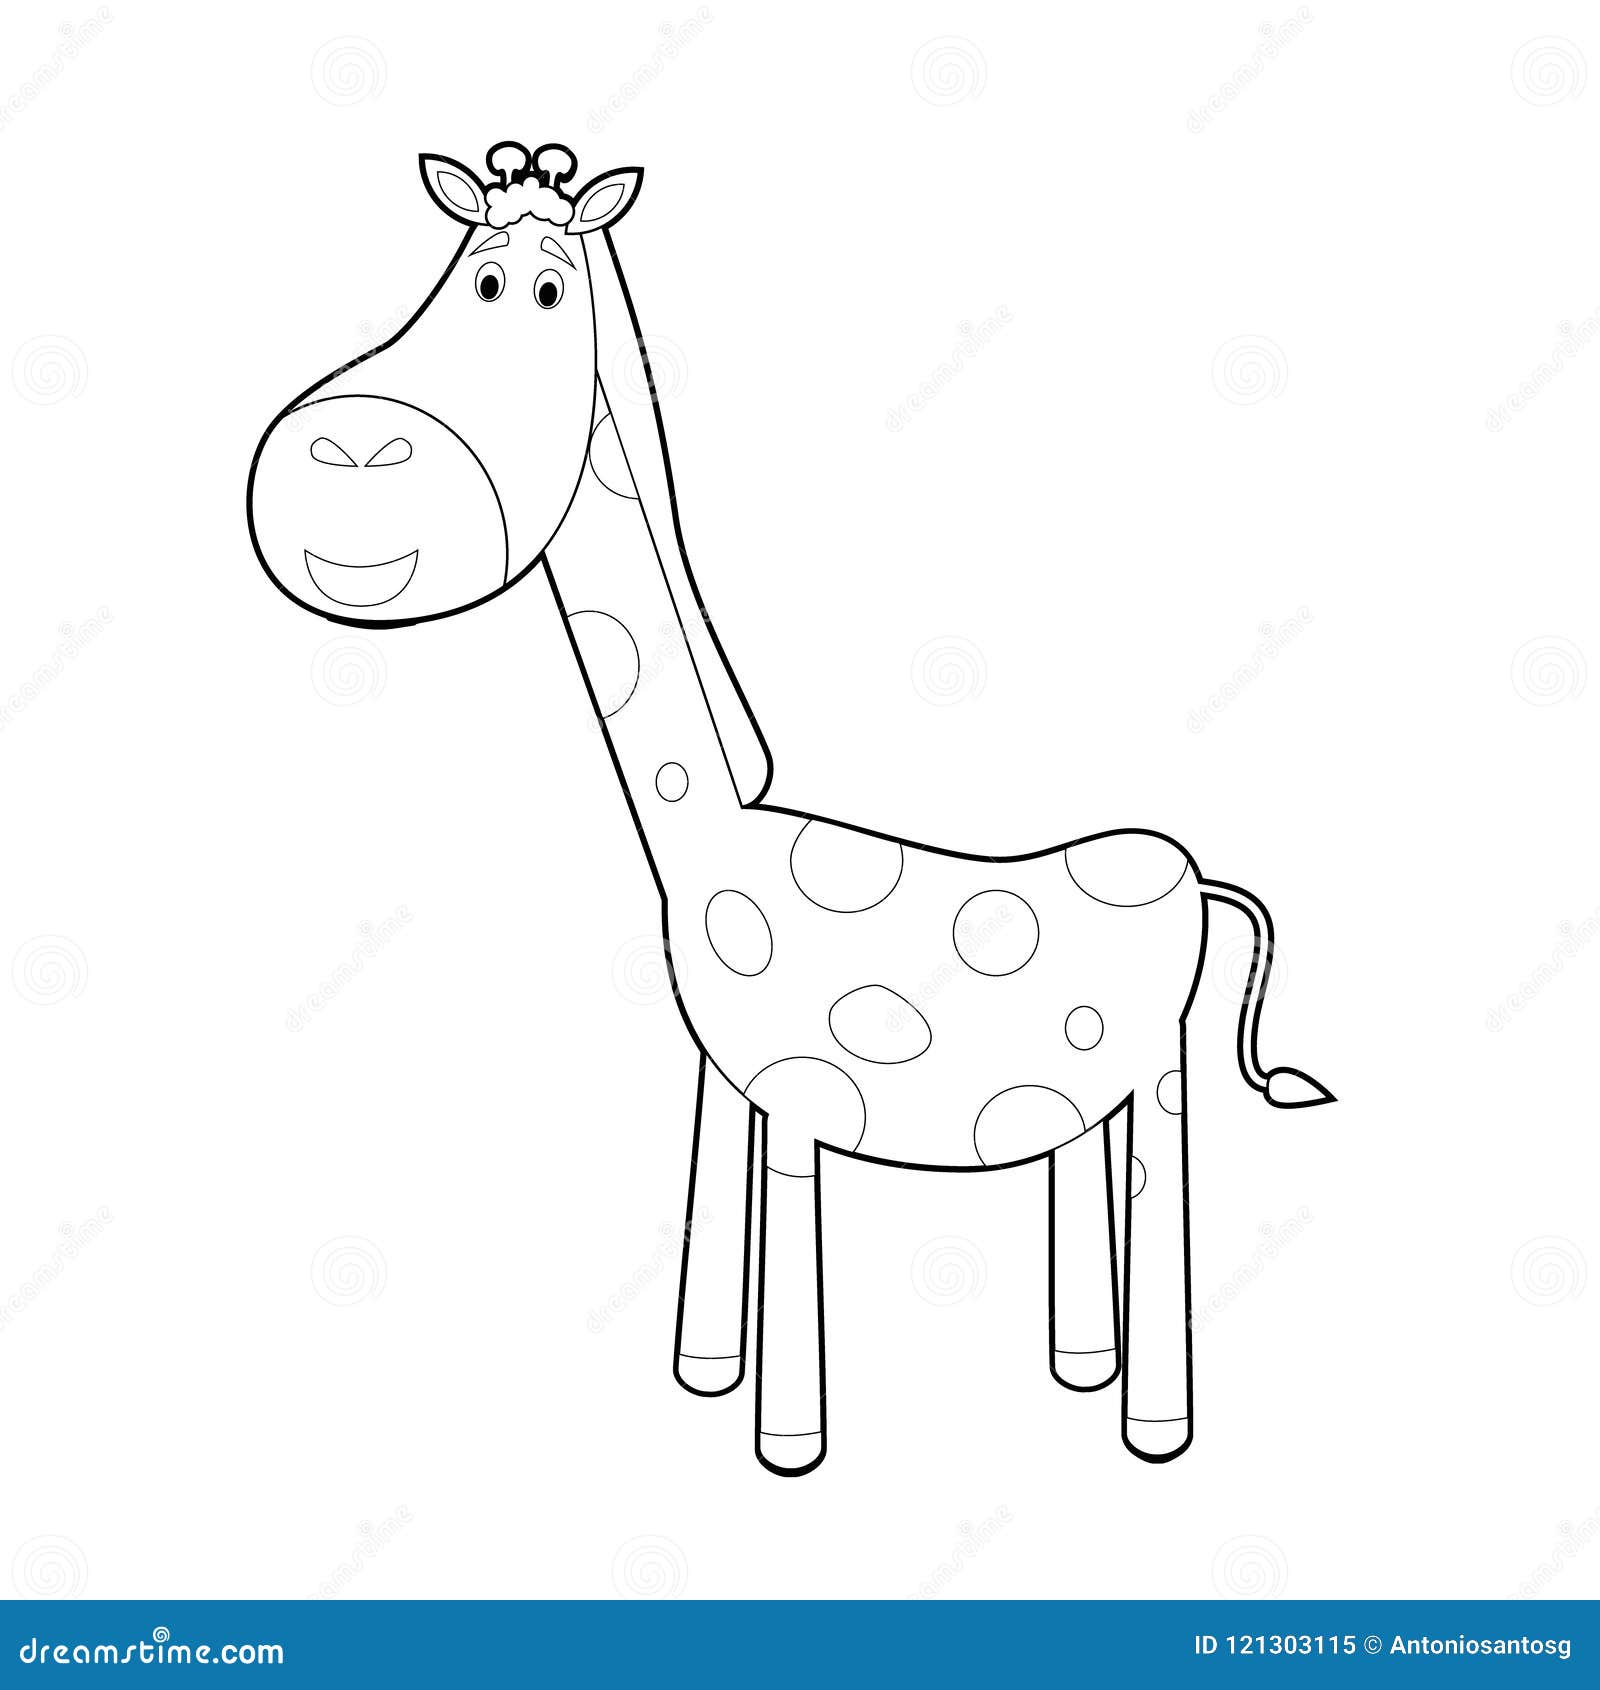 How to Draw a Giraffe | Easy drawings for kids, Easy drawings, Giraffe